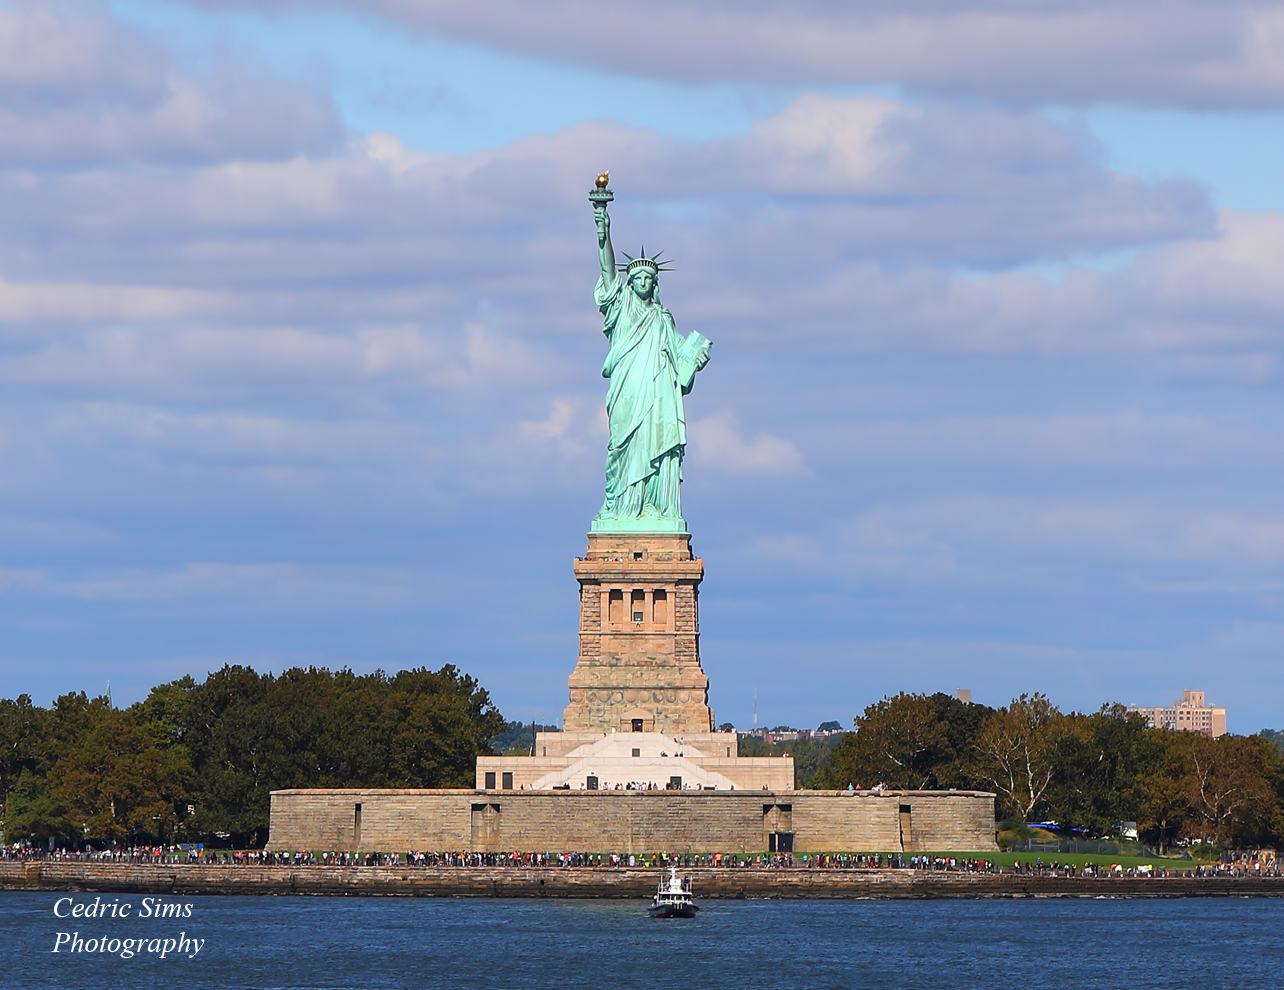   Statue of Liberty